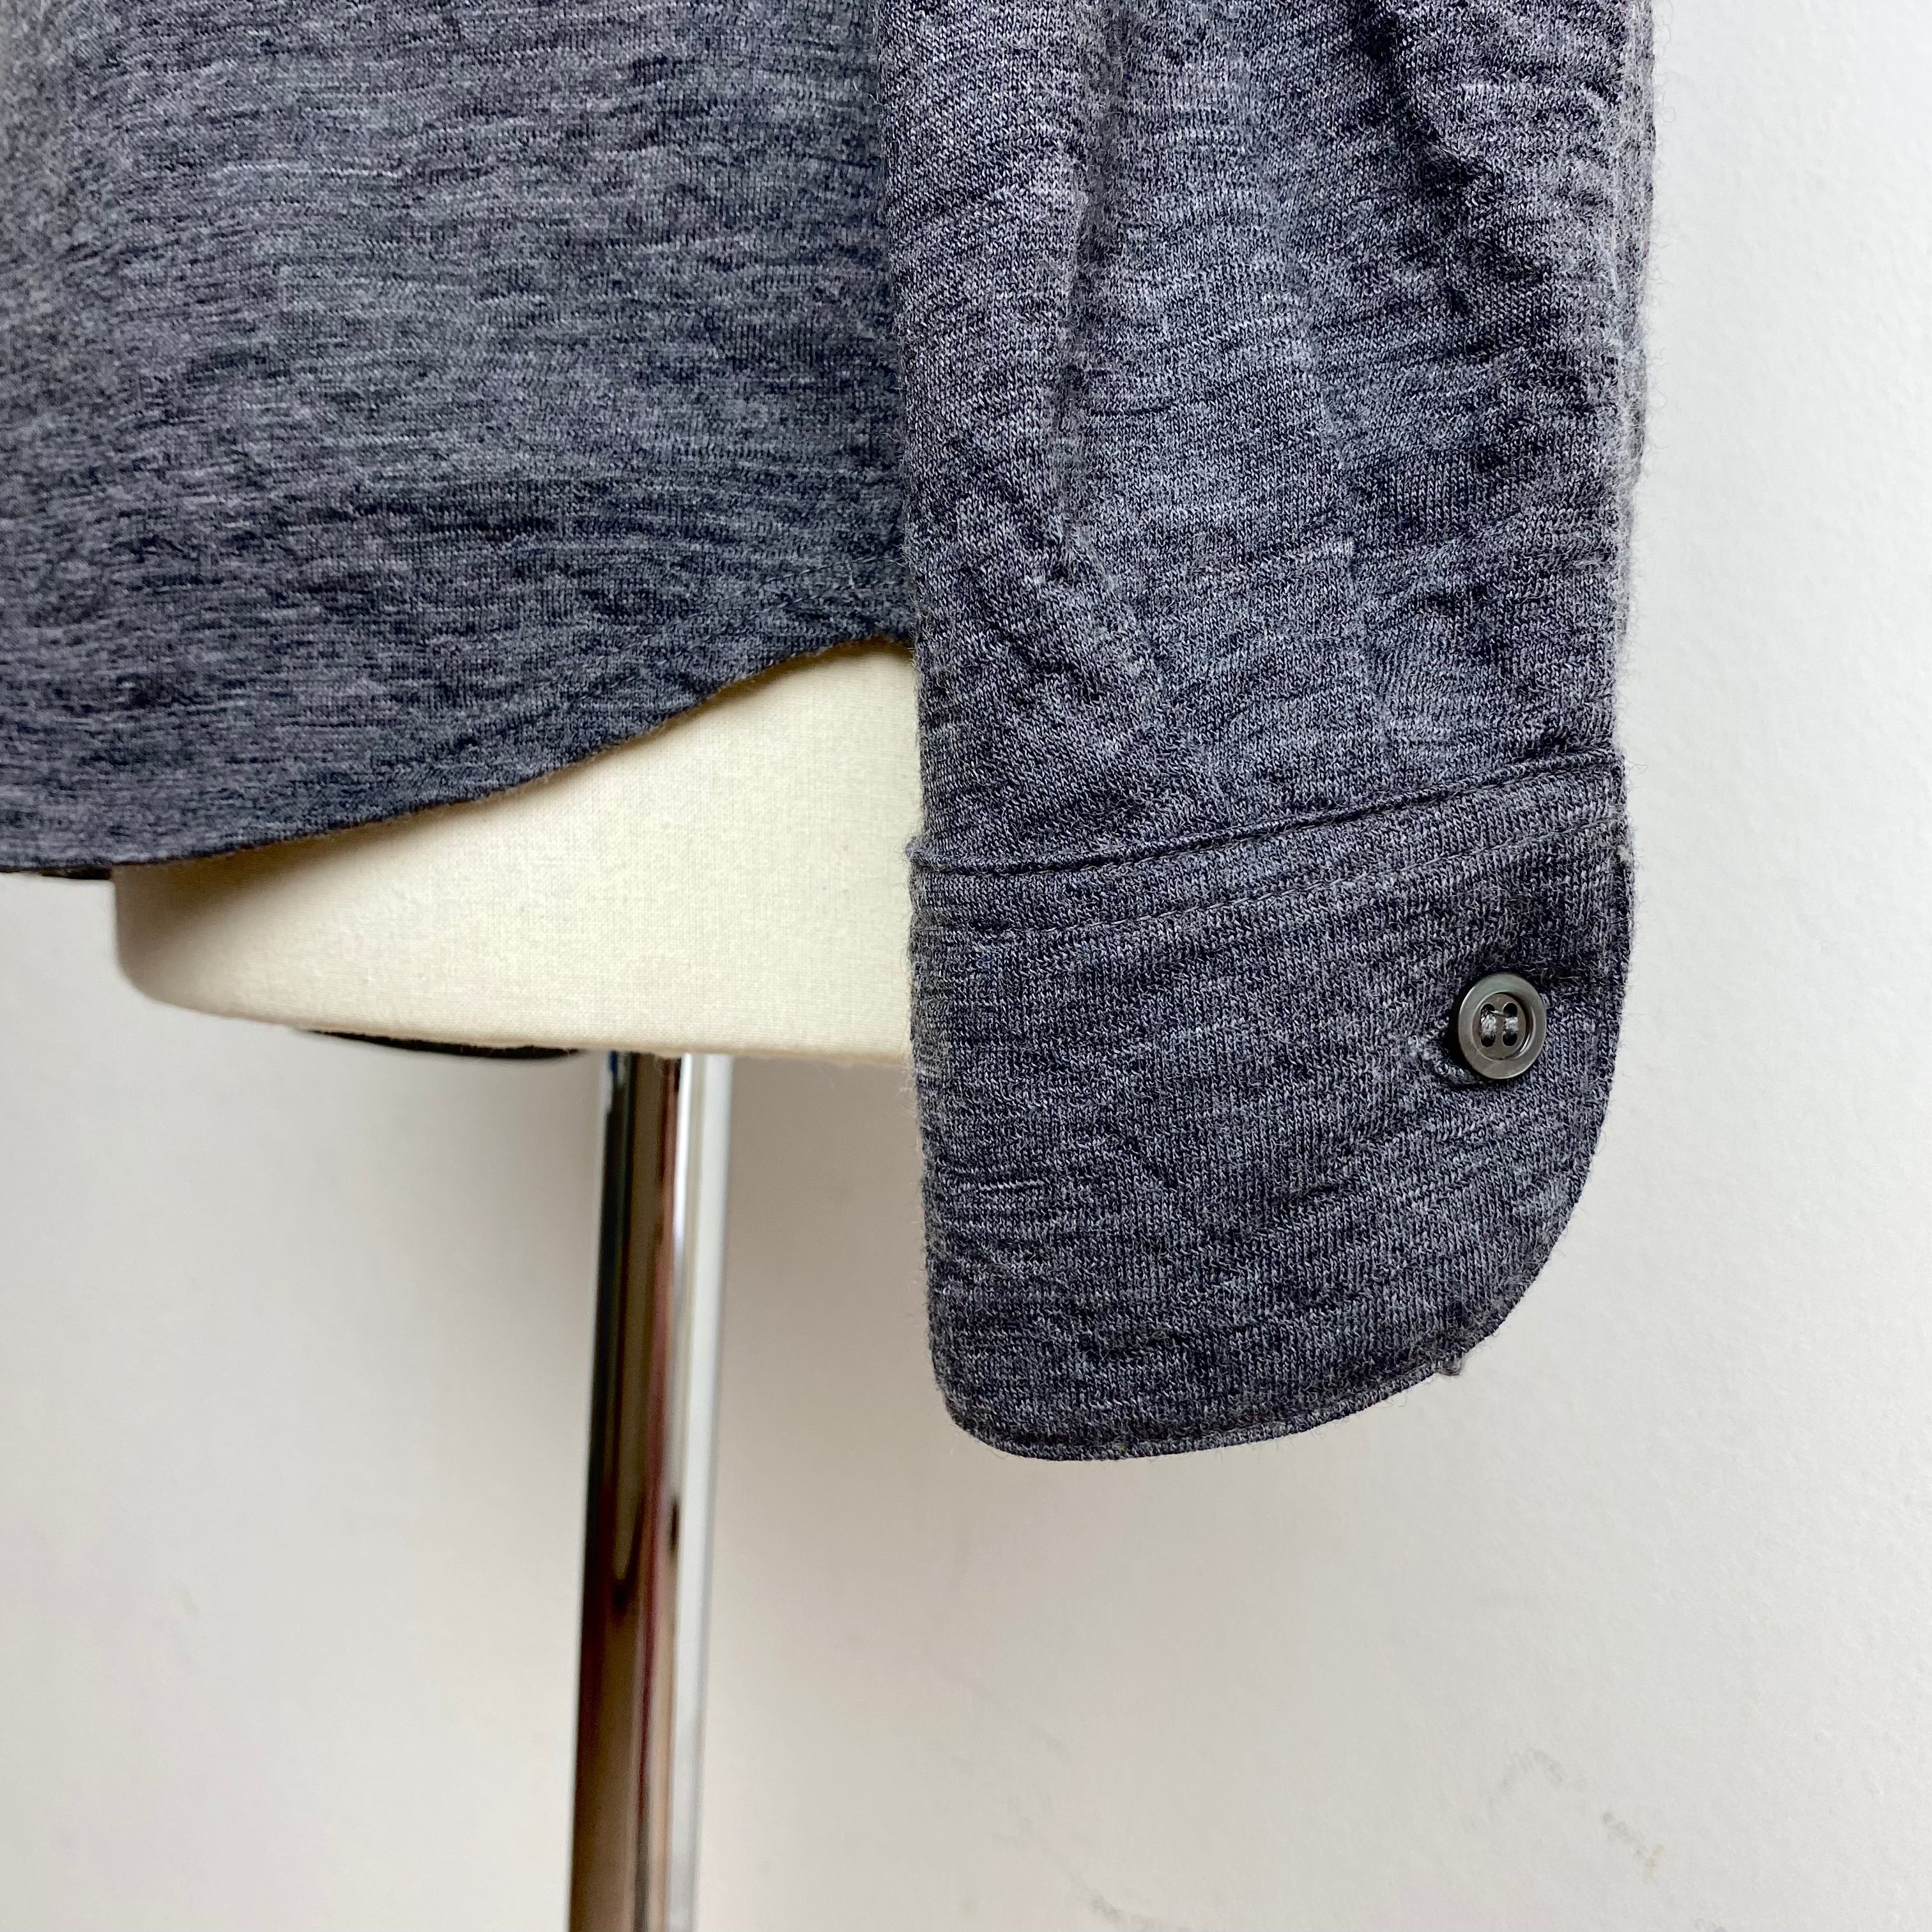 Melange Wool-Blend Polo Shirt - M